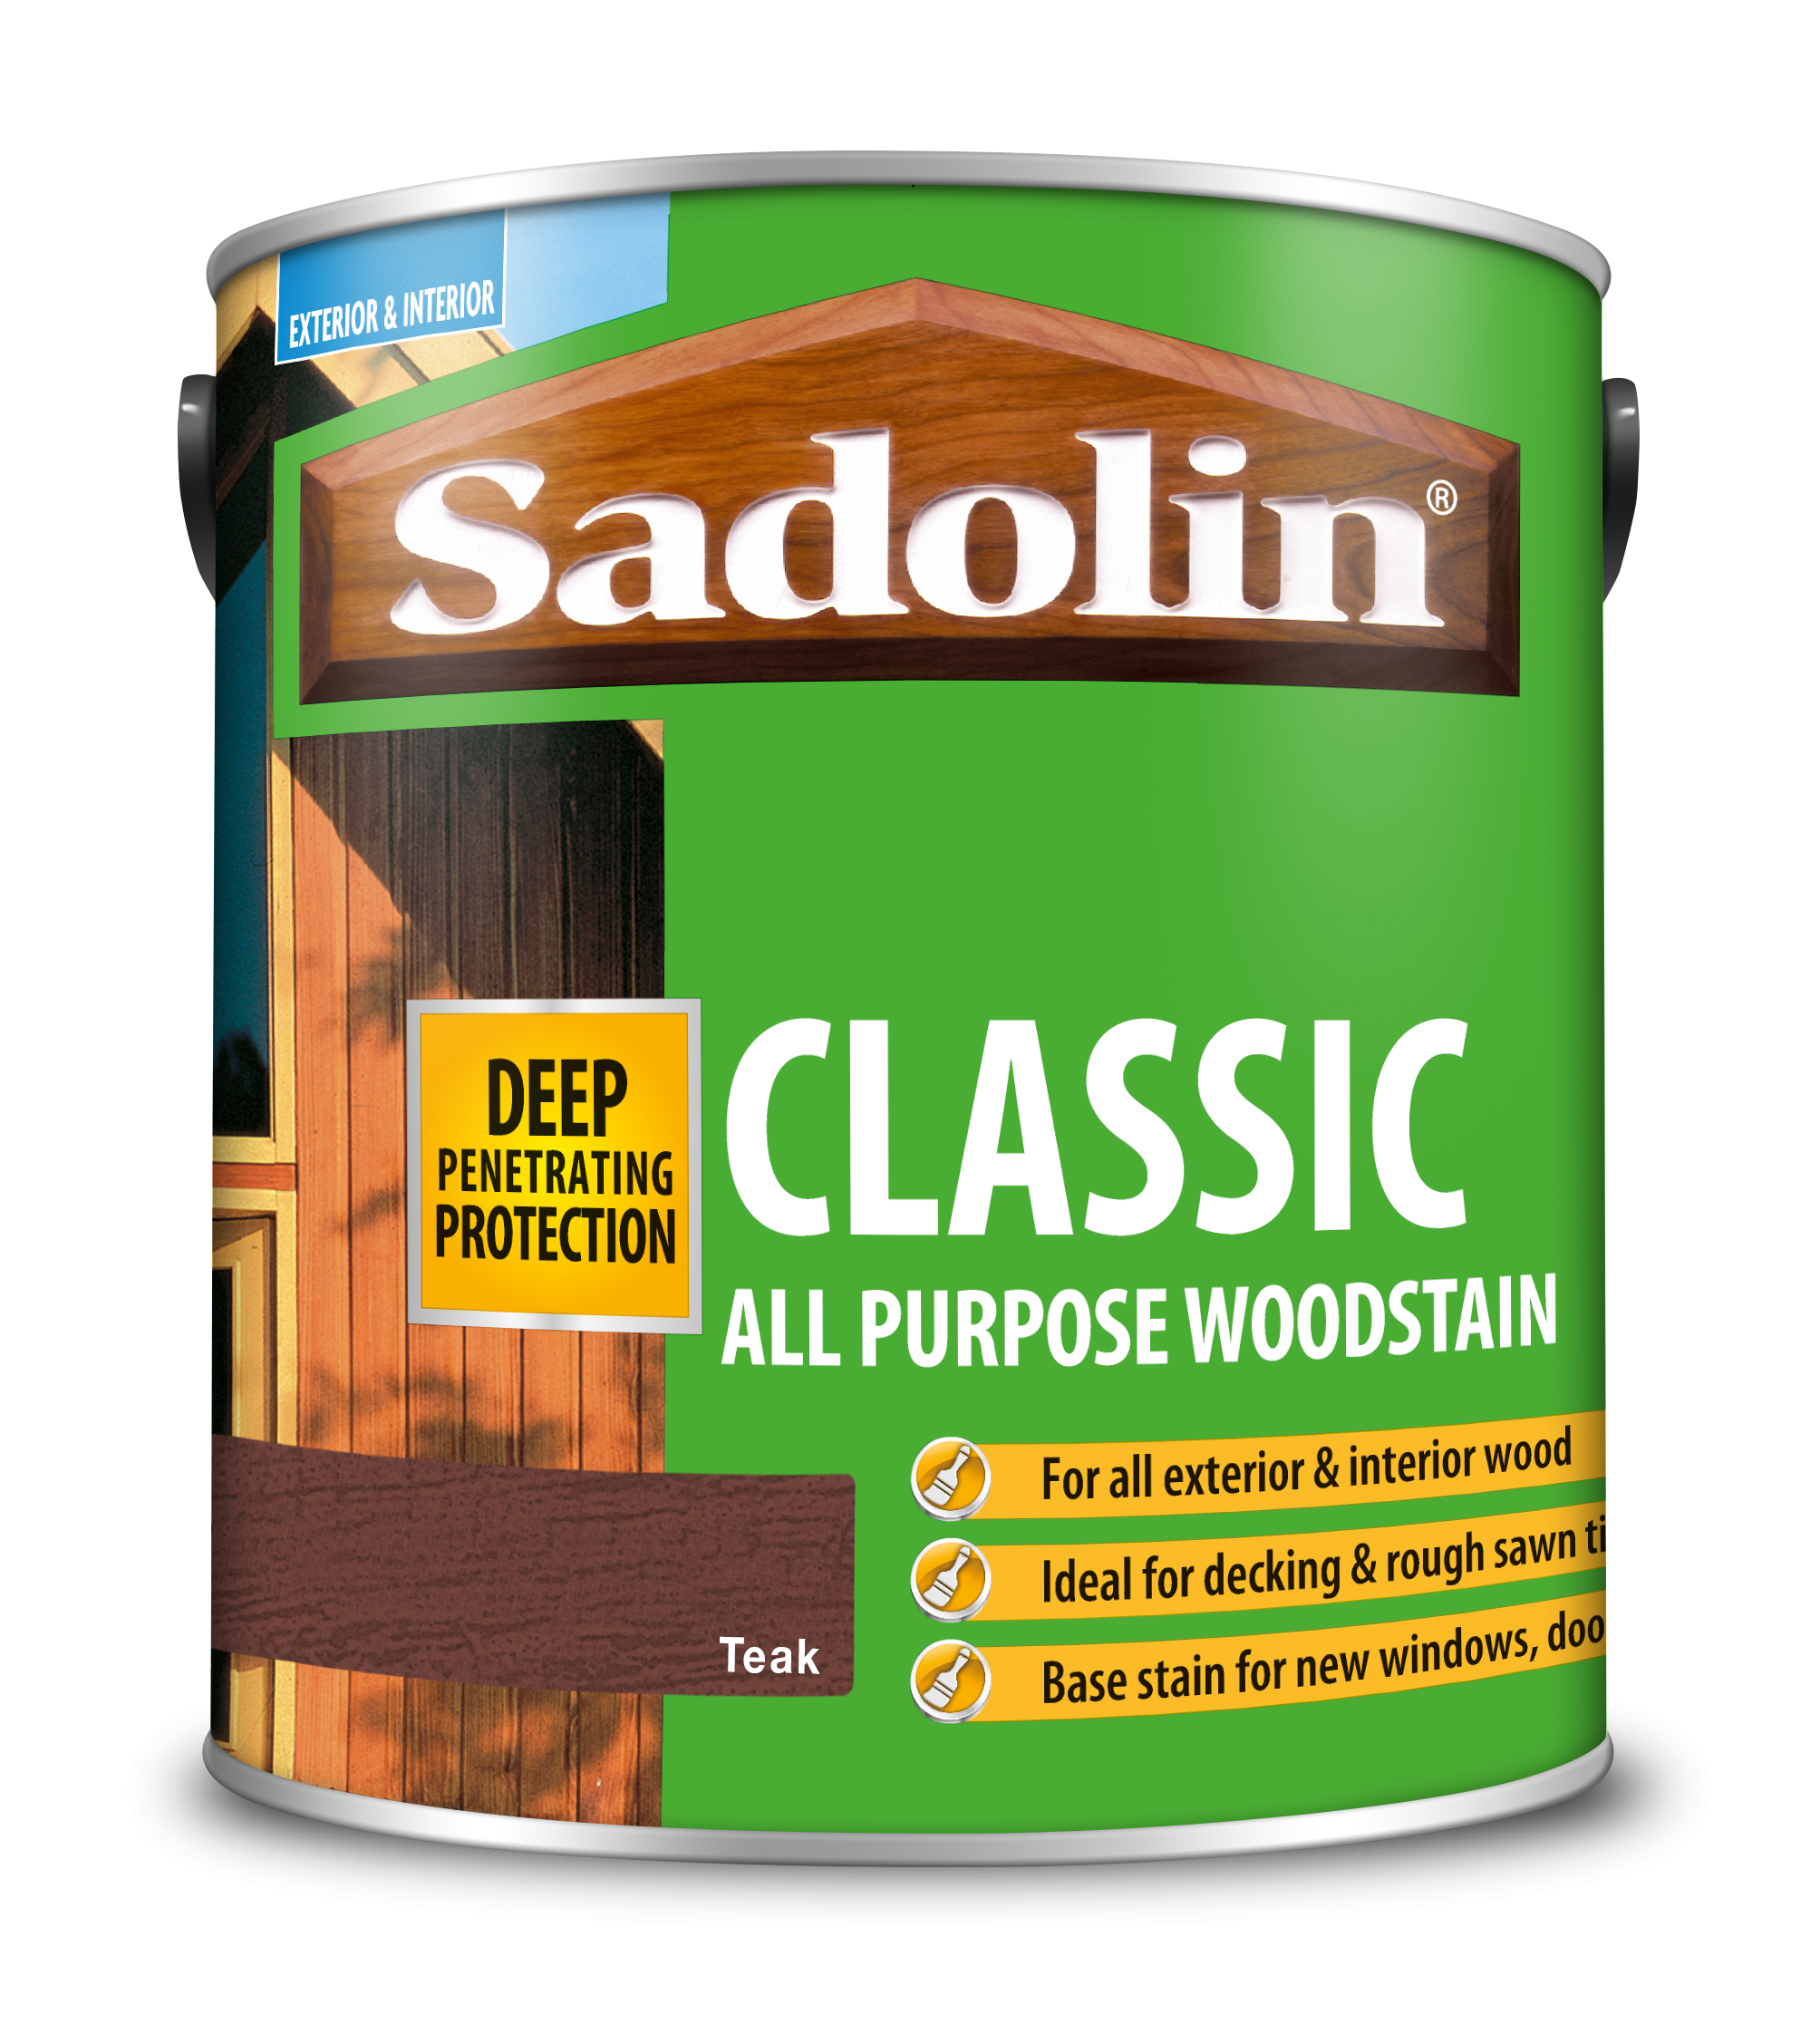 Sadolin Classic All Purpose Woodstain Teak 2.5L [MPPSPTB]  5028462